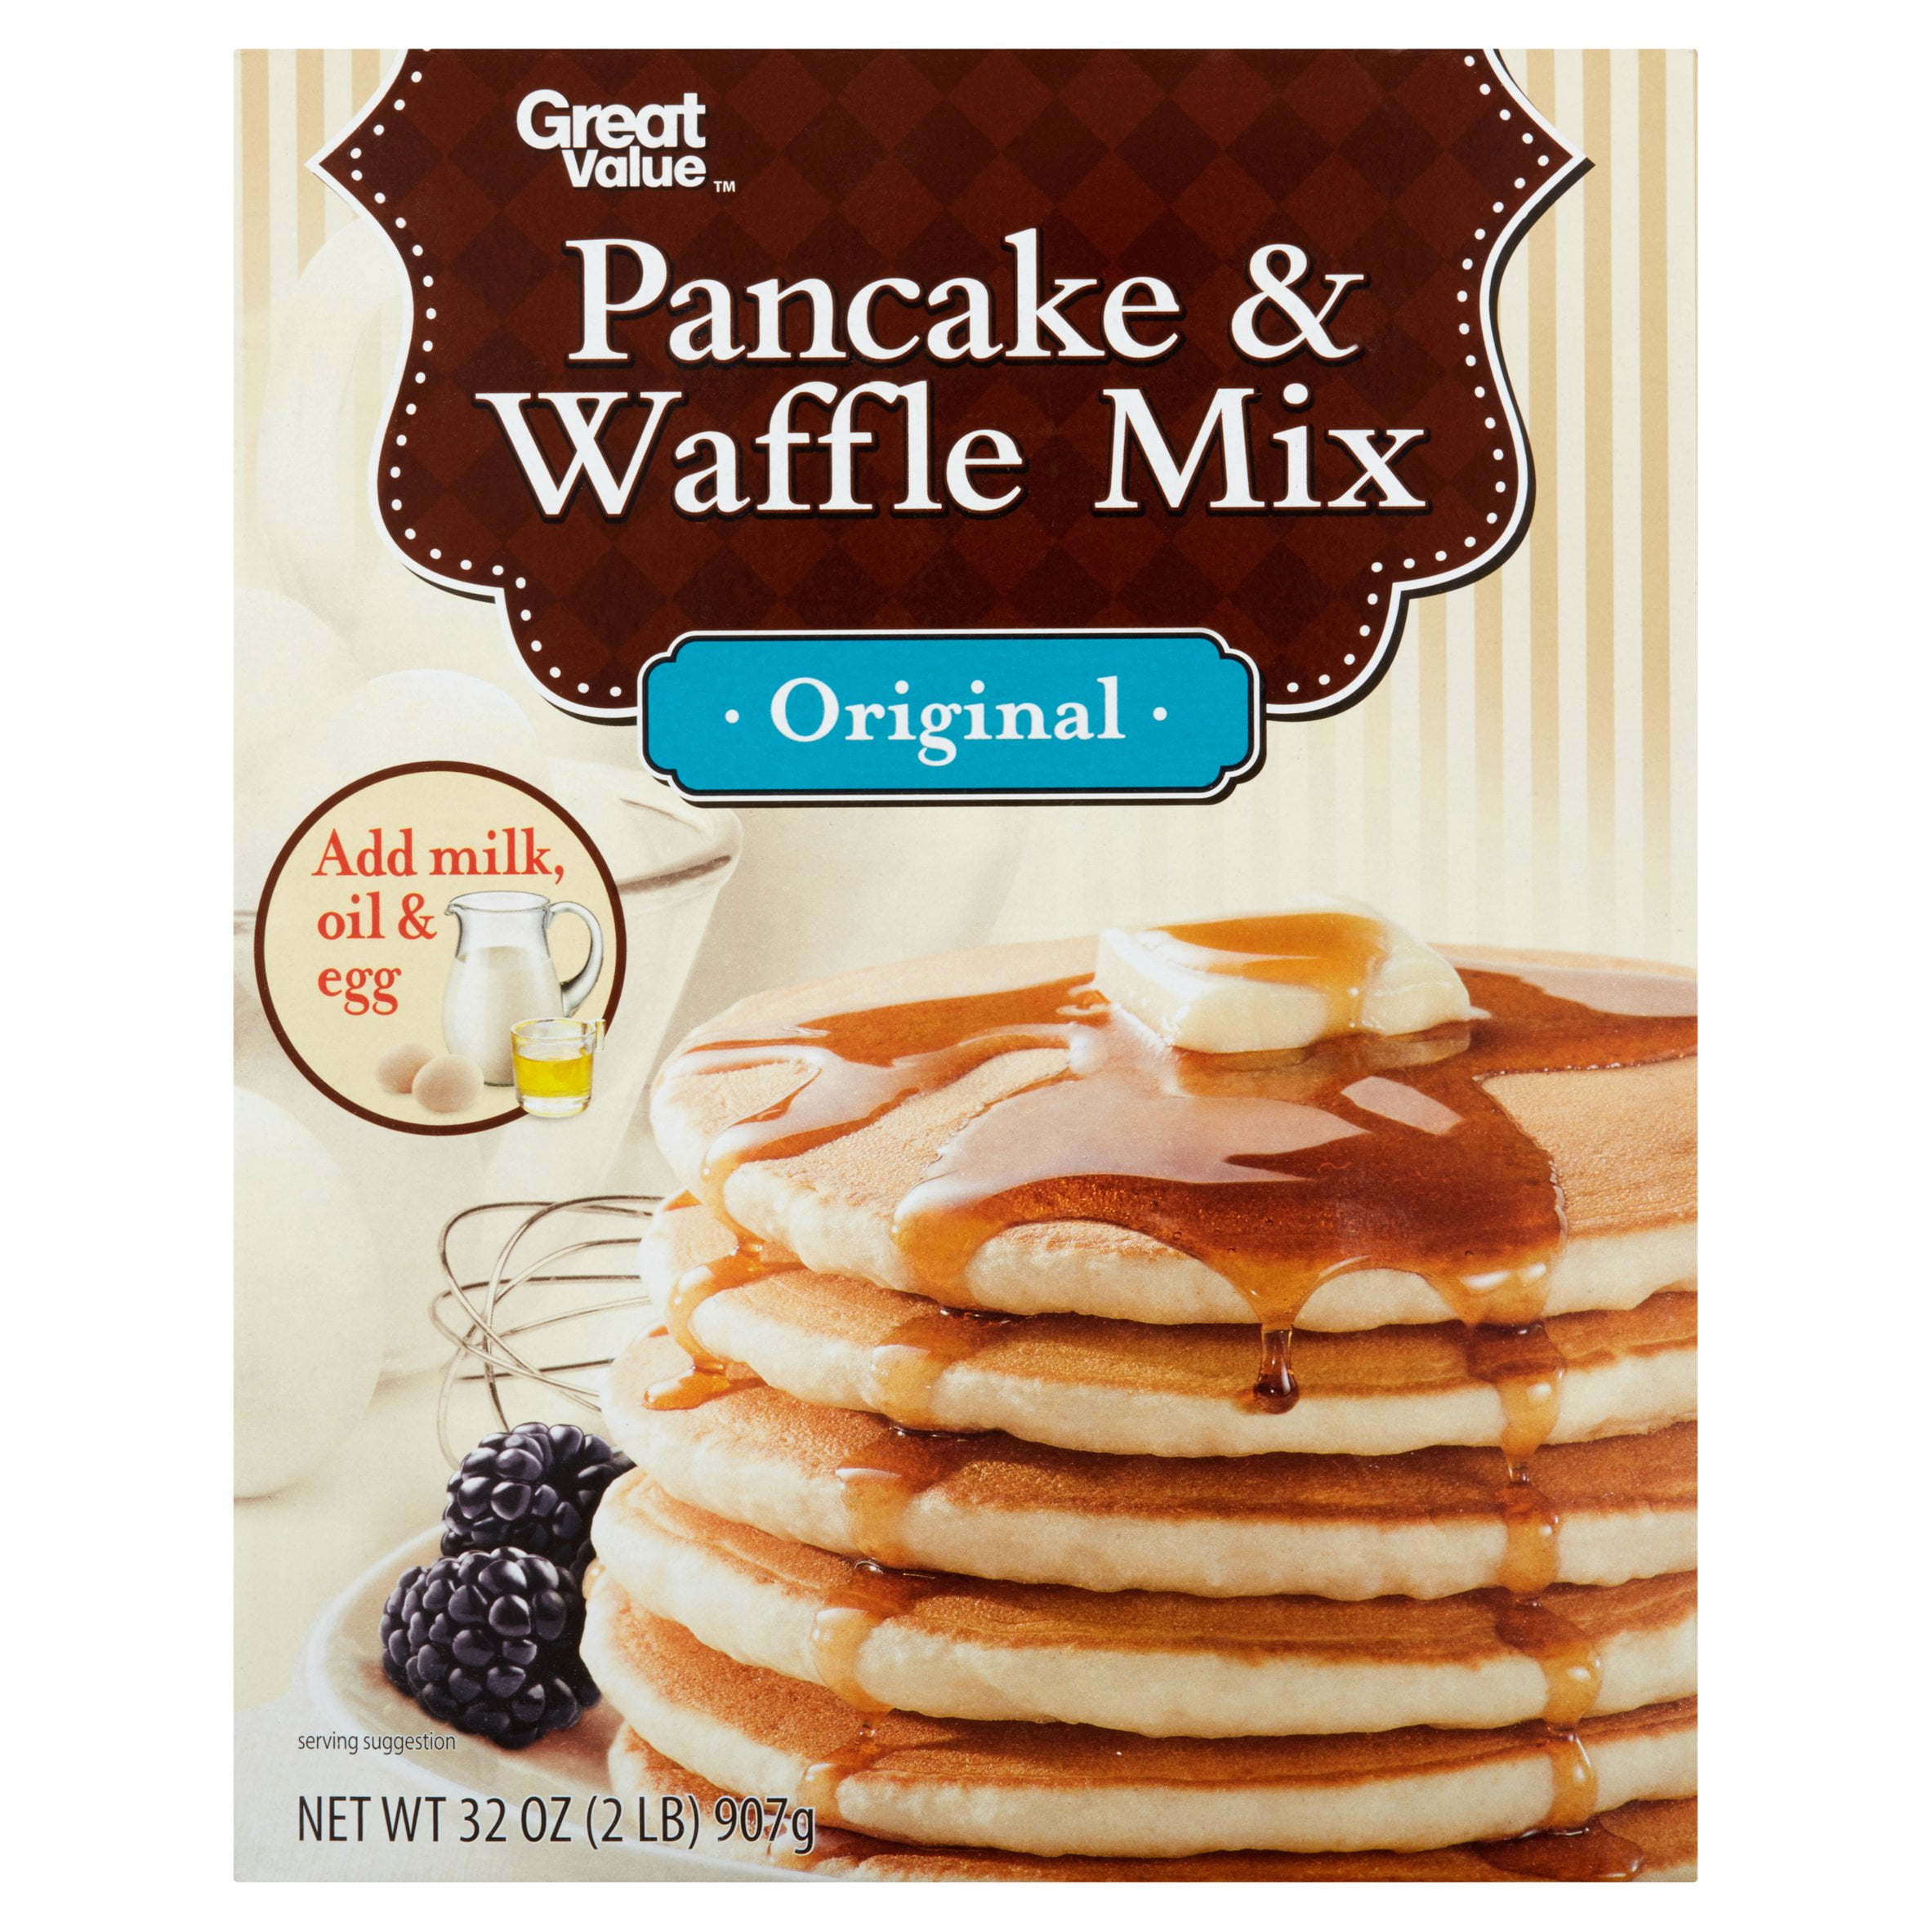 Great Value Original Pancake & Waffle Mix, 32 oz - Walmart.com